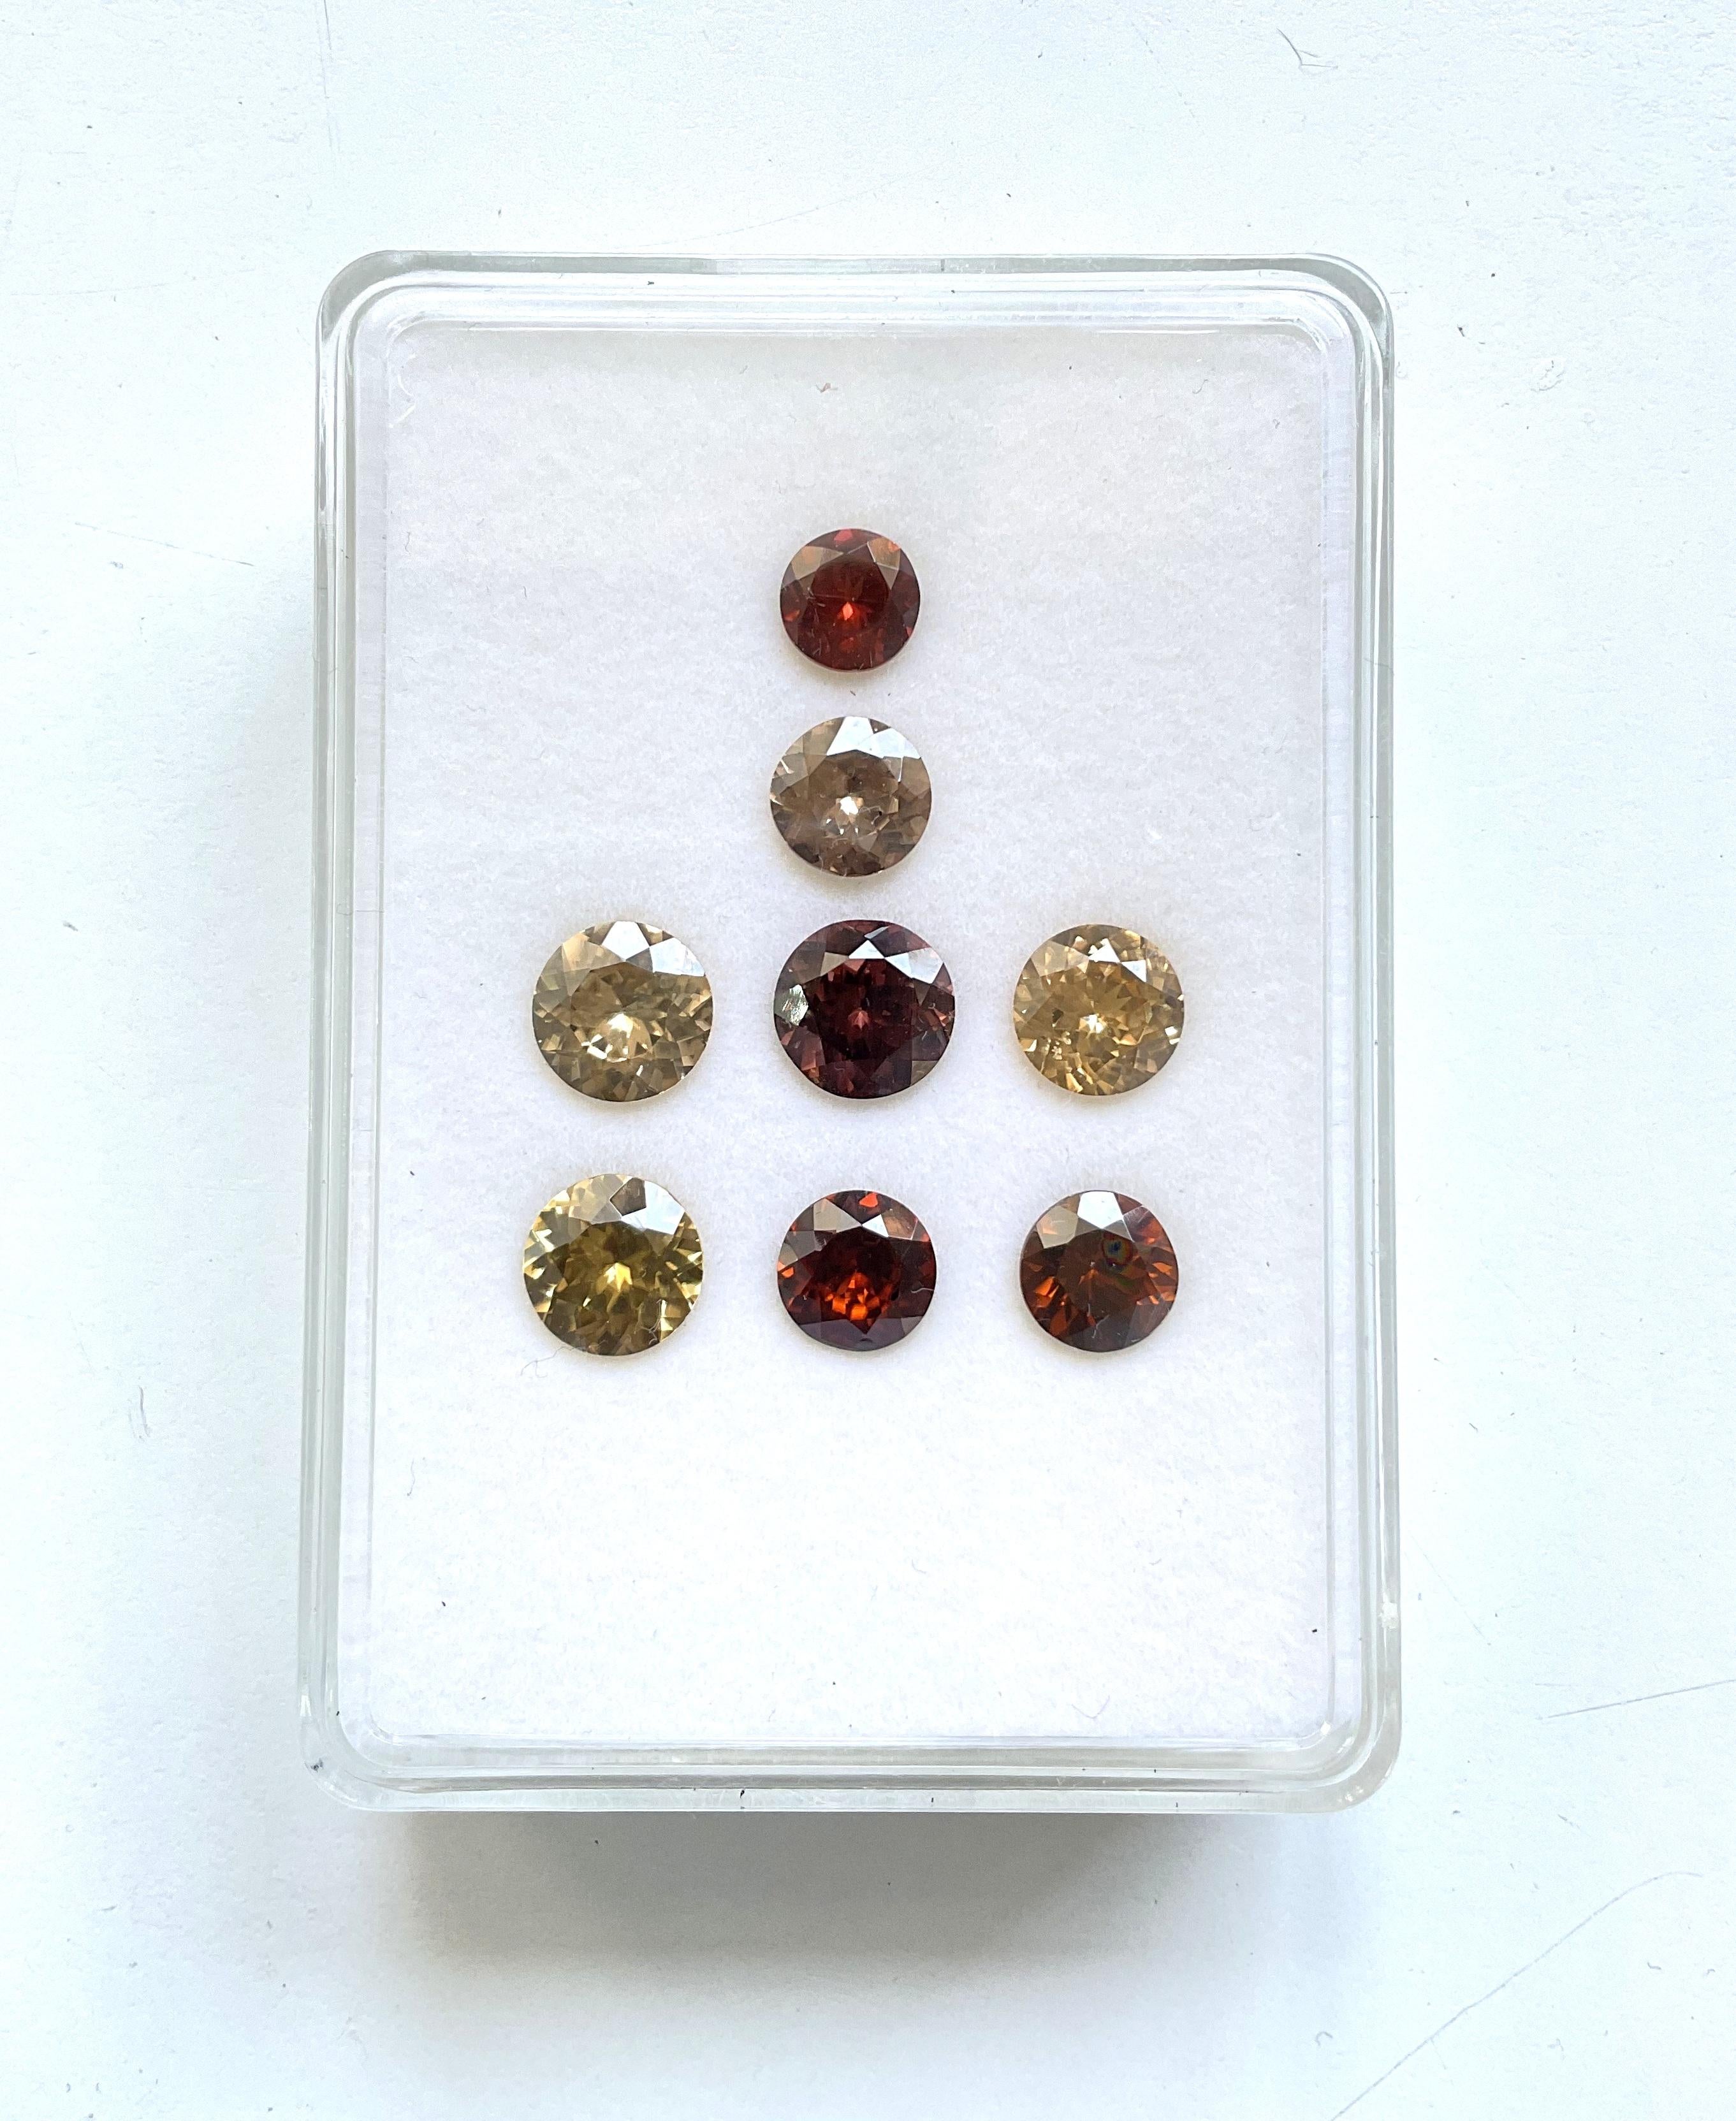 32.45 Carat Tanzania Zircon Round Faceted Natural Cut stone Fine Jewelry Gemstone

Poids - 32.45 Carats
Taille - 8 à 10 mm
Forme - Ronde 
Quantité - 8 pièces